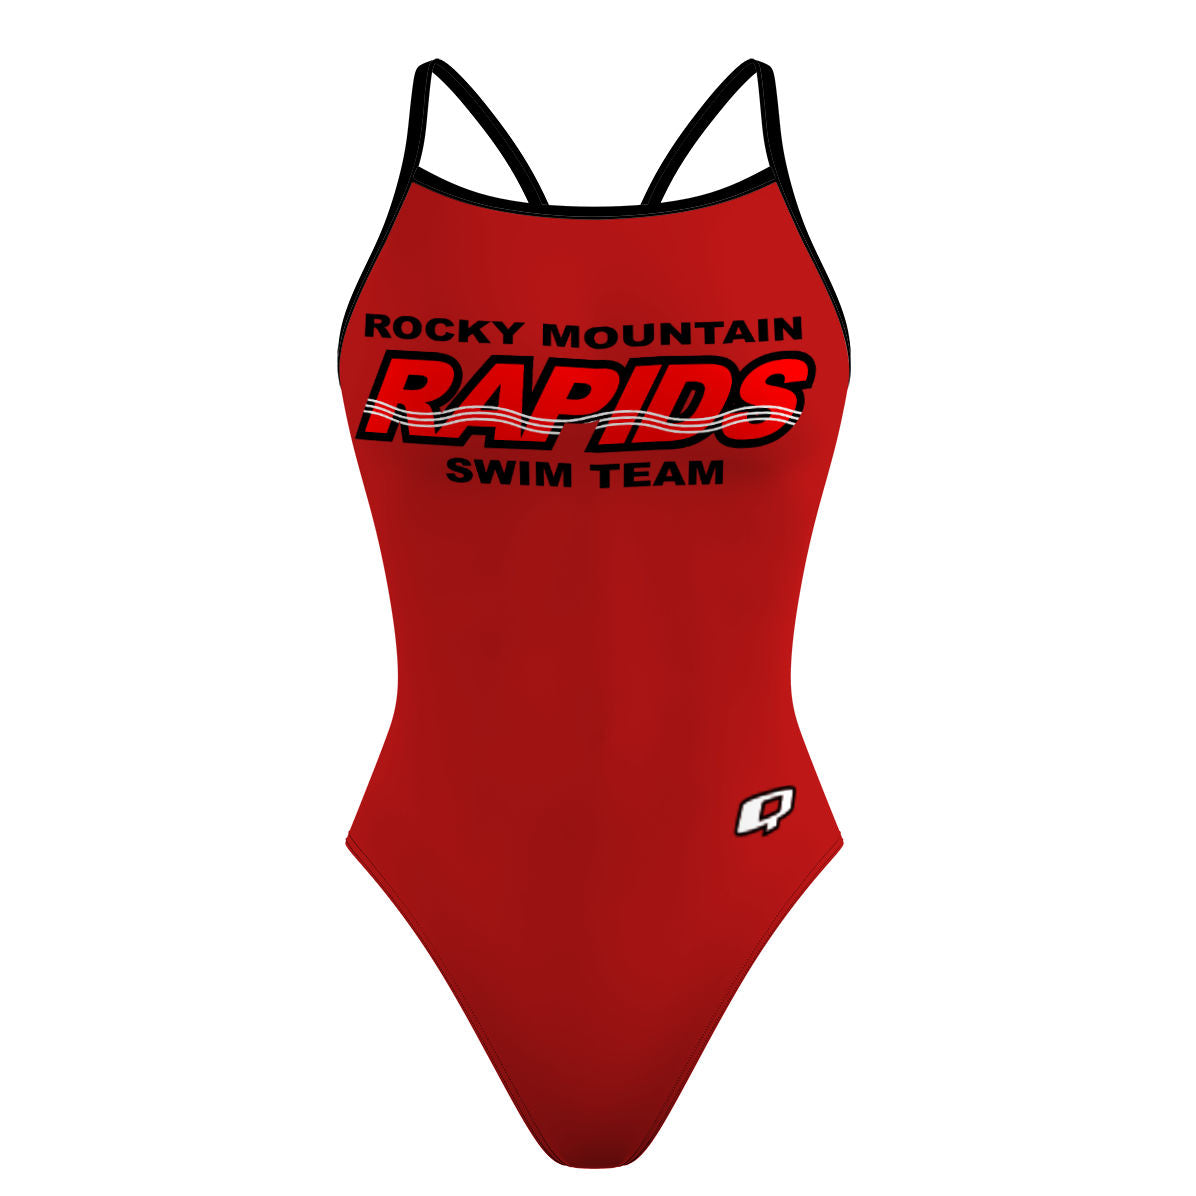 Rapids Original Logo - Skinny Strap Swimsuit